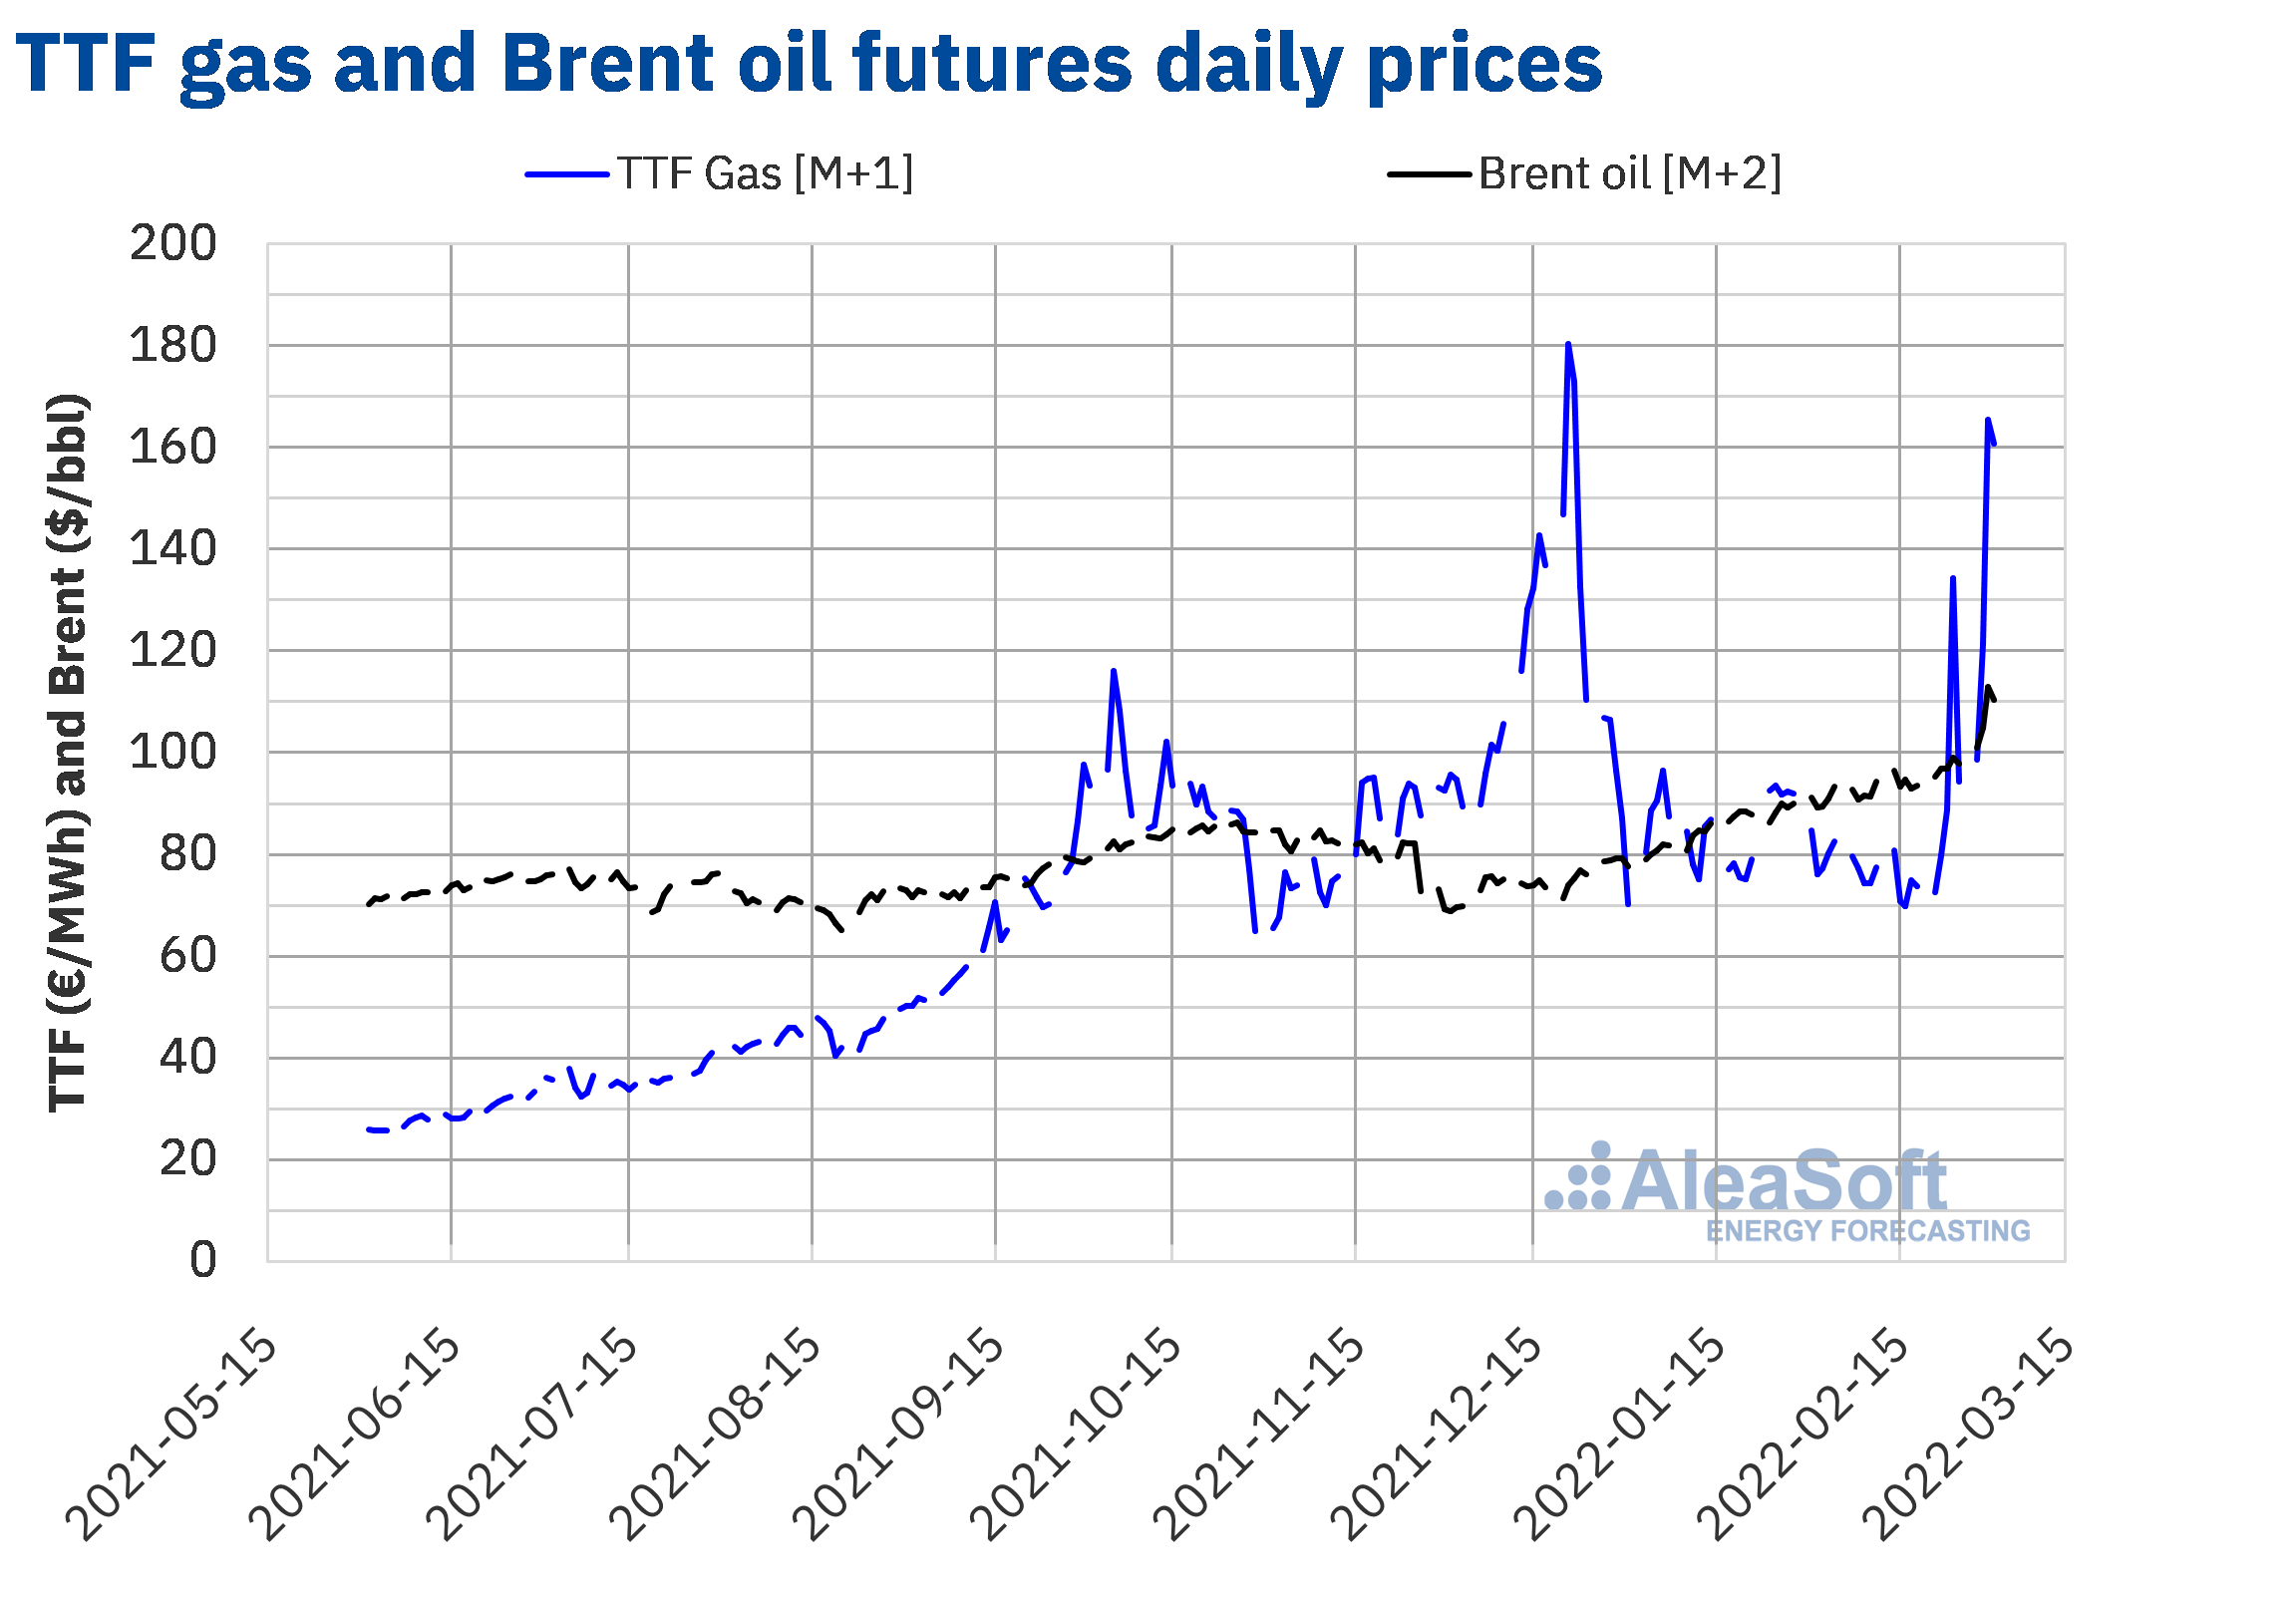 AleaSoft - TTF gas m1 Brent oil m2 futures prices